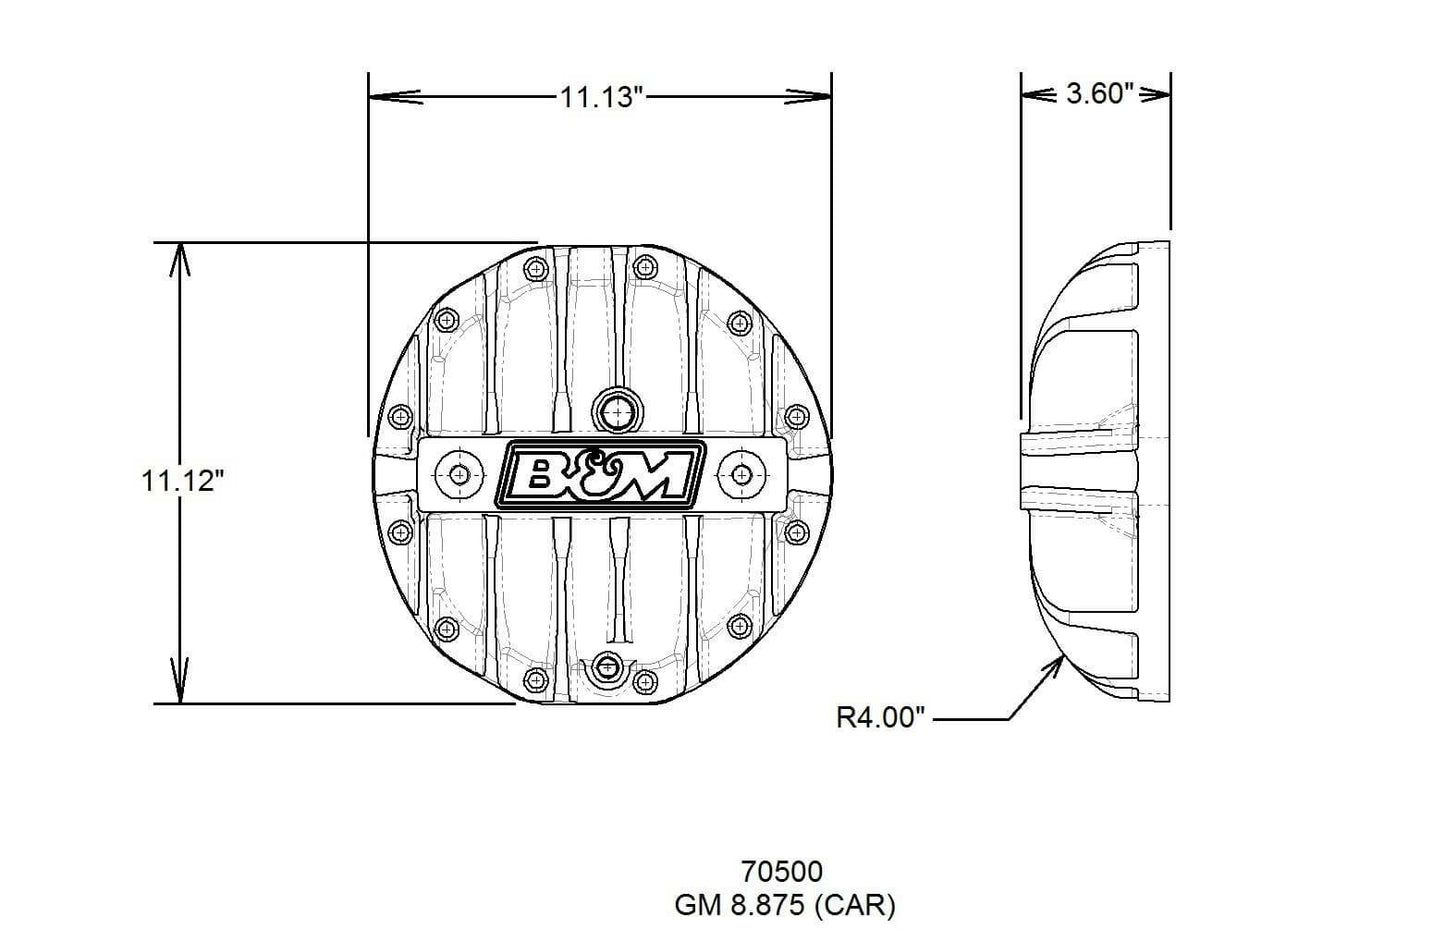 B&M Hi-Tek Aluminum Differential Cover for GM 8.875-inch 12-bolt Car - 70500